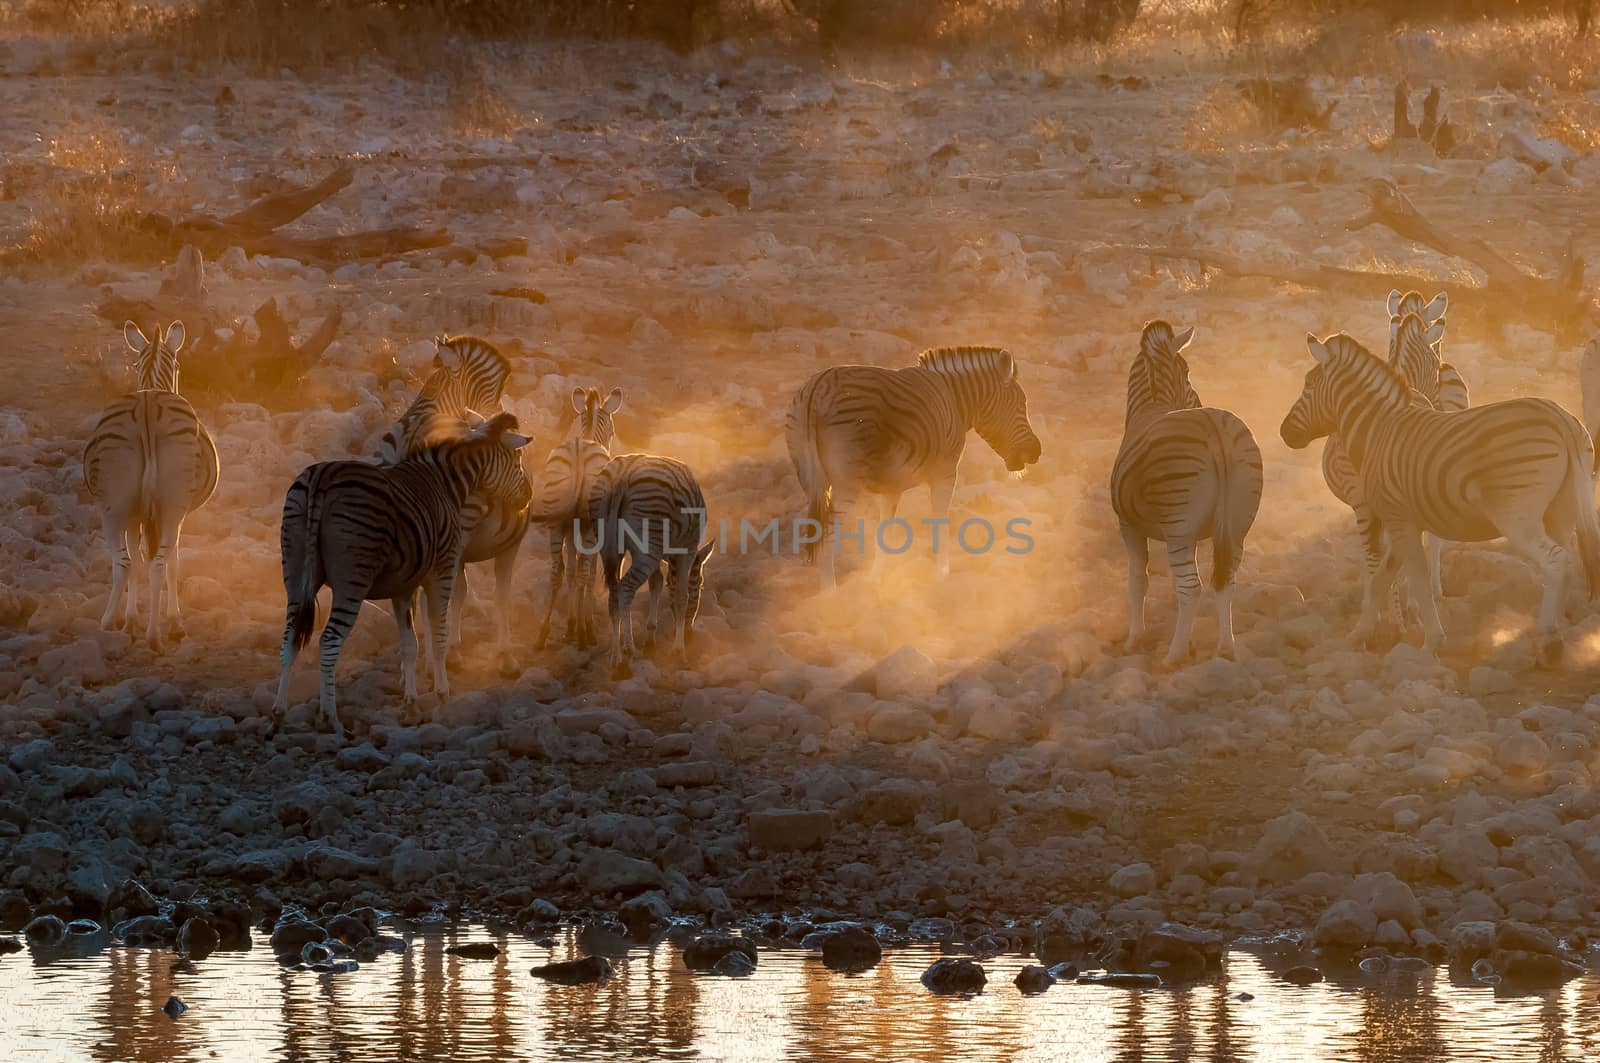 Burchells zebras, Equus quagga burchellii, at sunset at a waterhole in northern Namibia